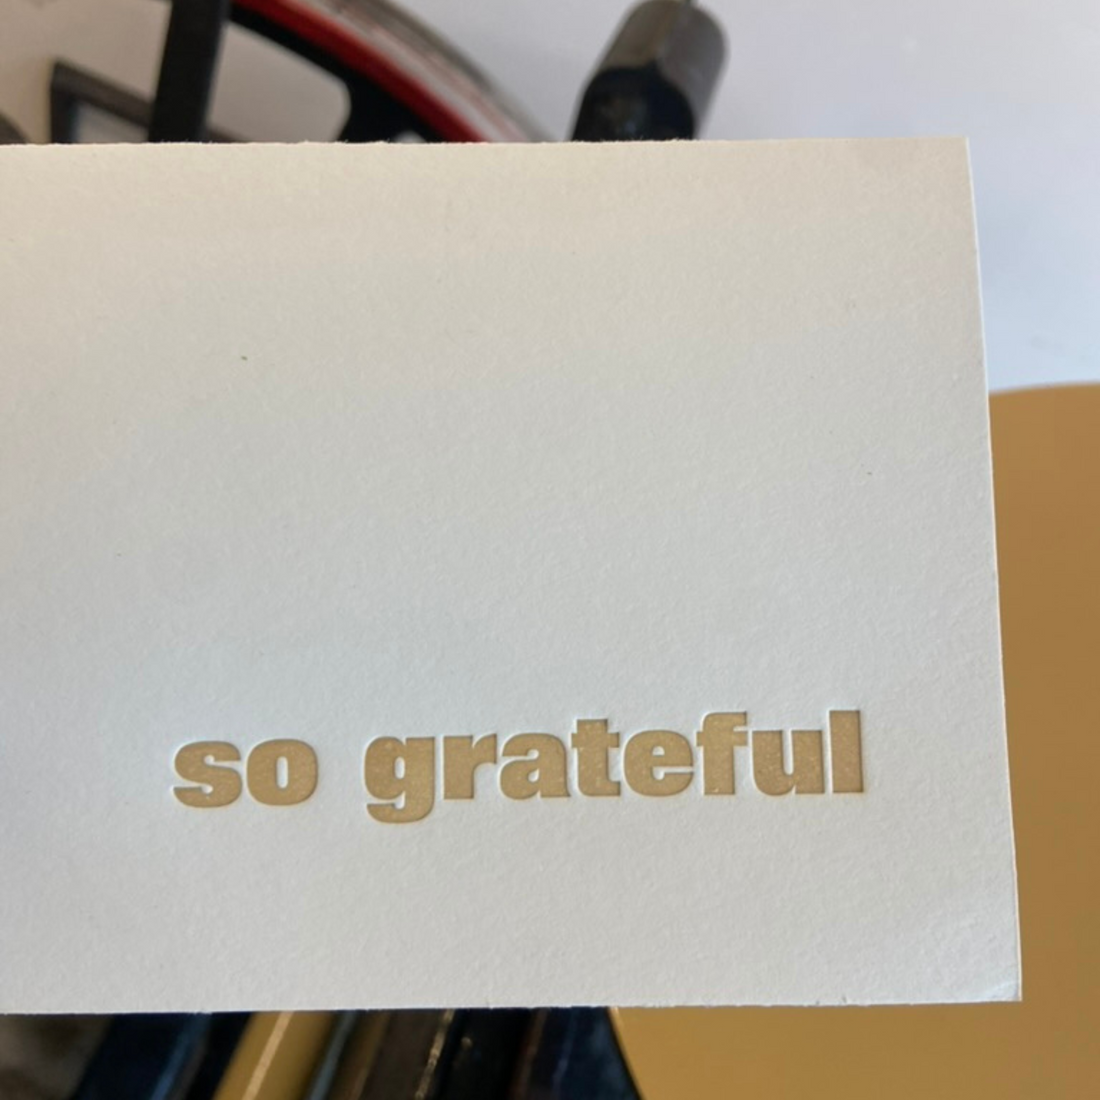 So Grateful greeting card